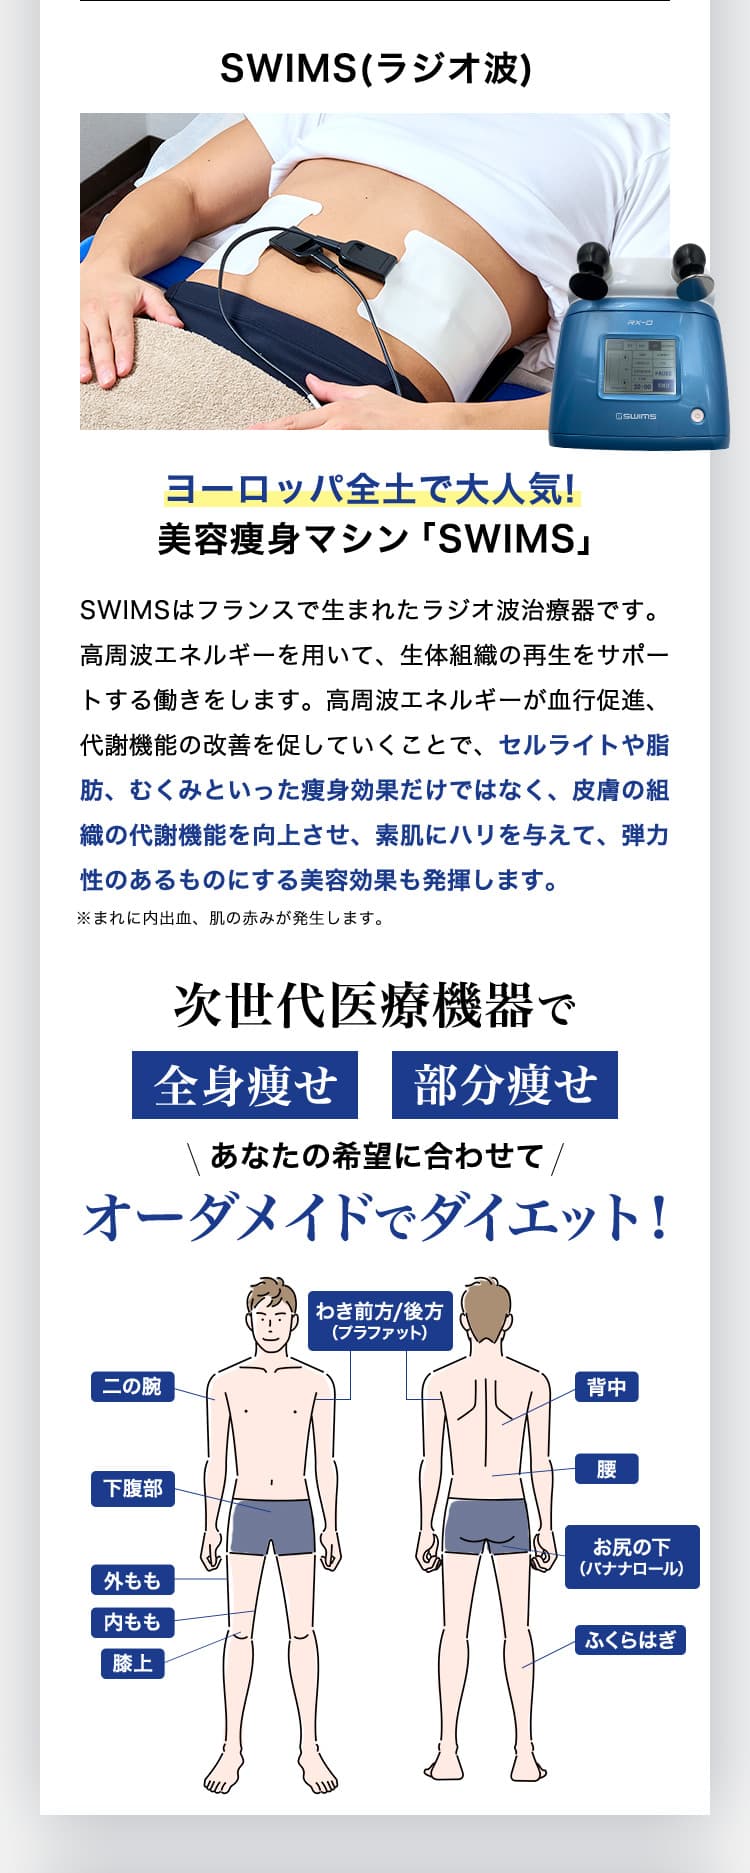 SWIMS（ラジオ波）